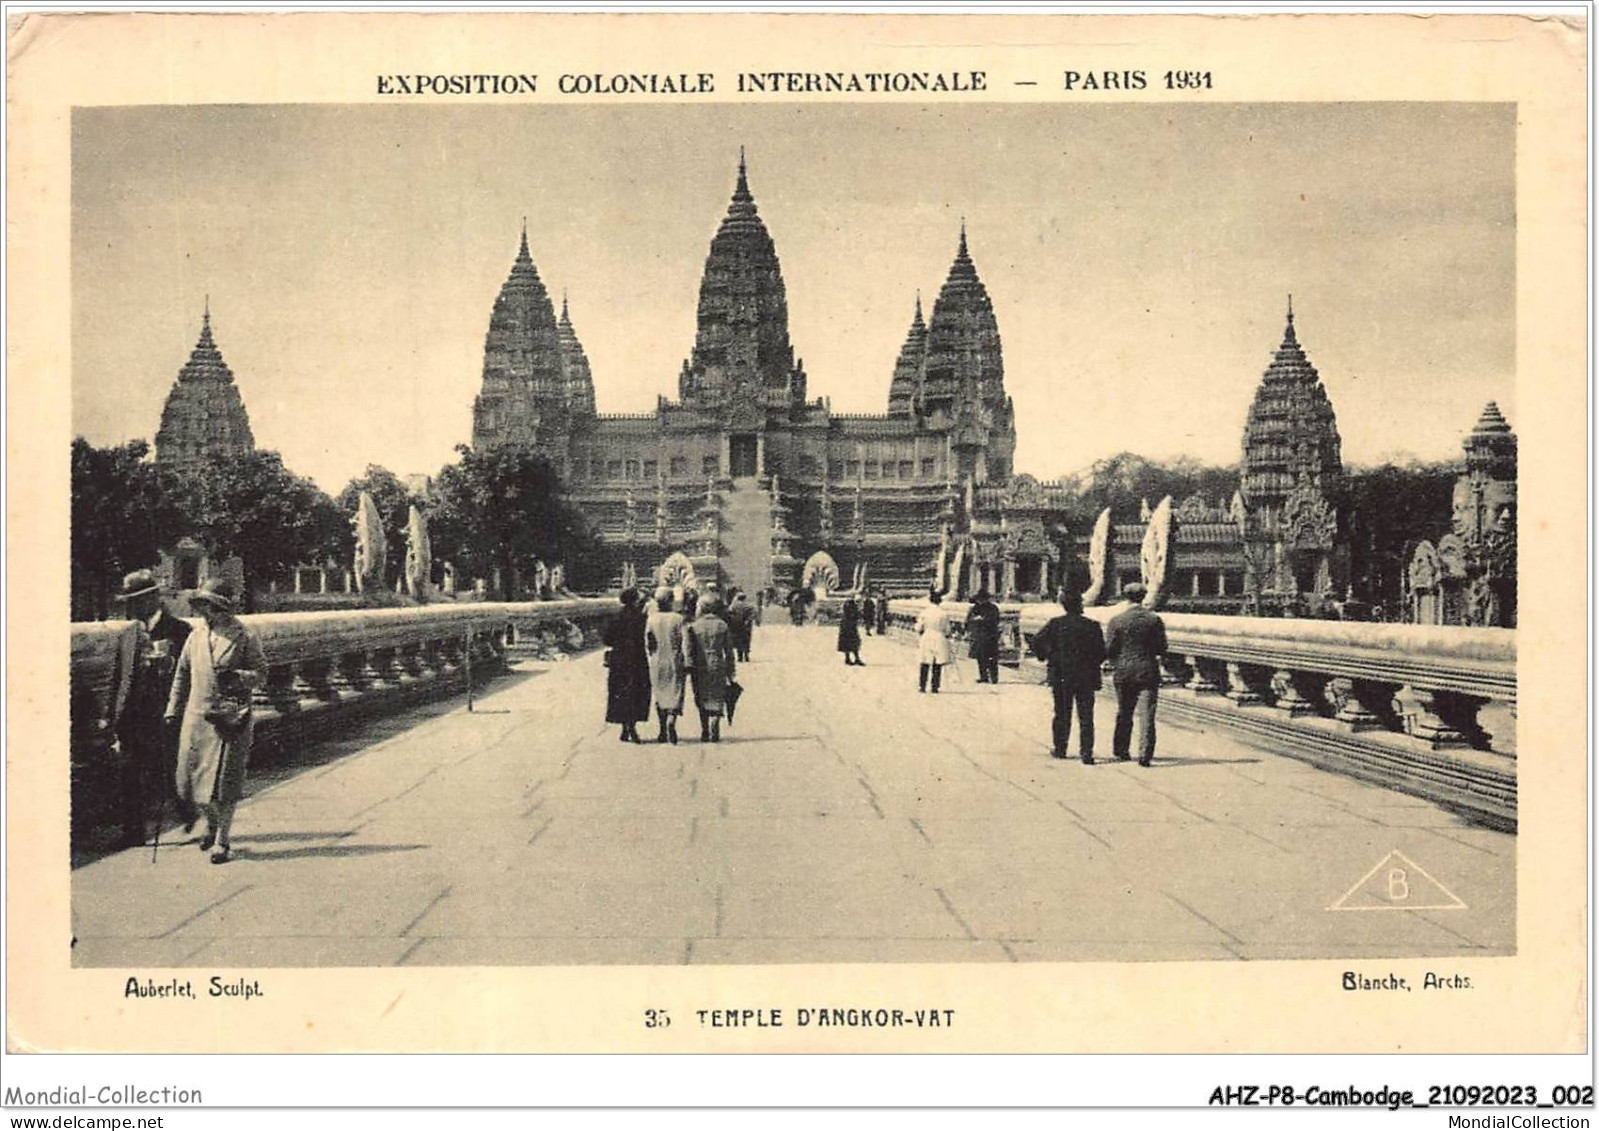 AHZP8-CAMBODGE-0684 - EXPOSITION COLONIALE INTERNATIONALE - PARIS 1931 - TEMPLE D'ANGKOR-VAT - Kambodscha